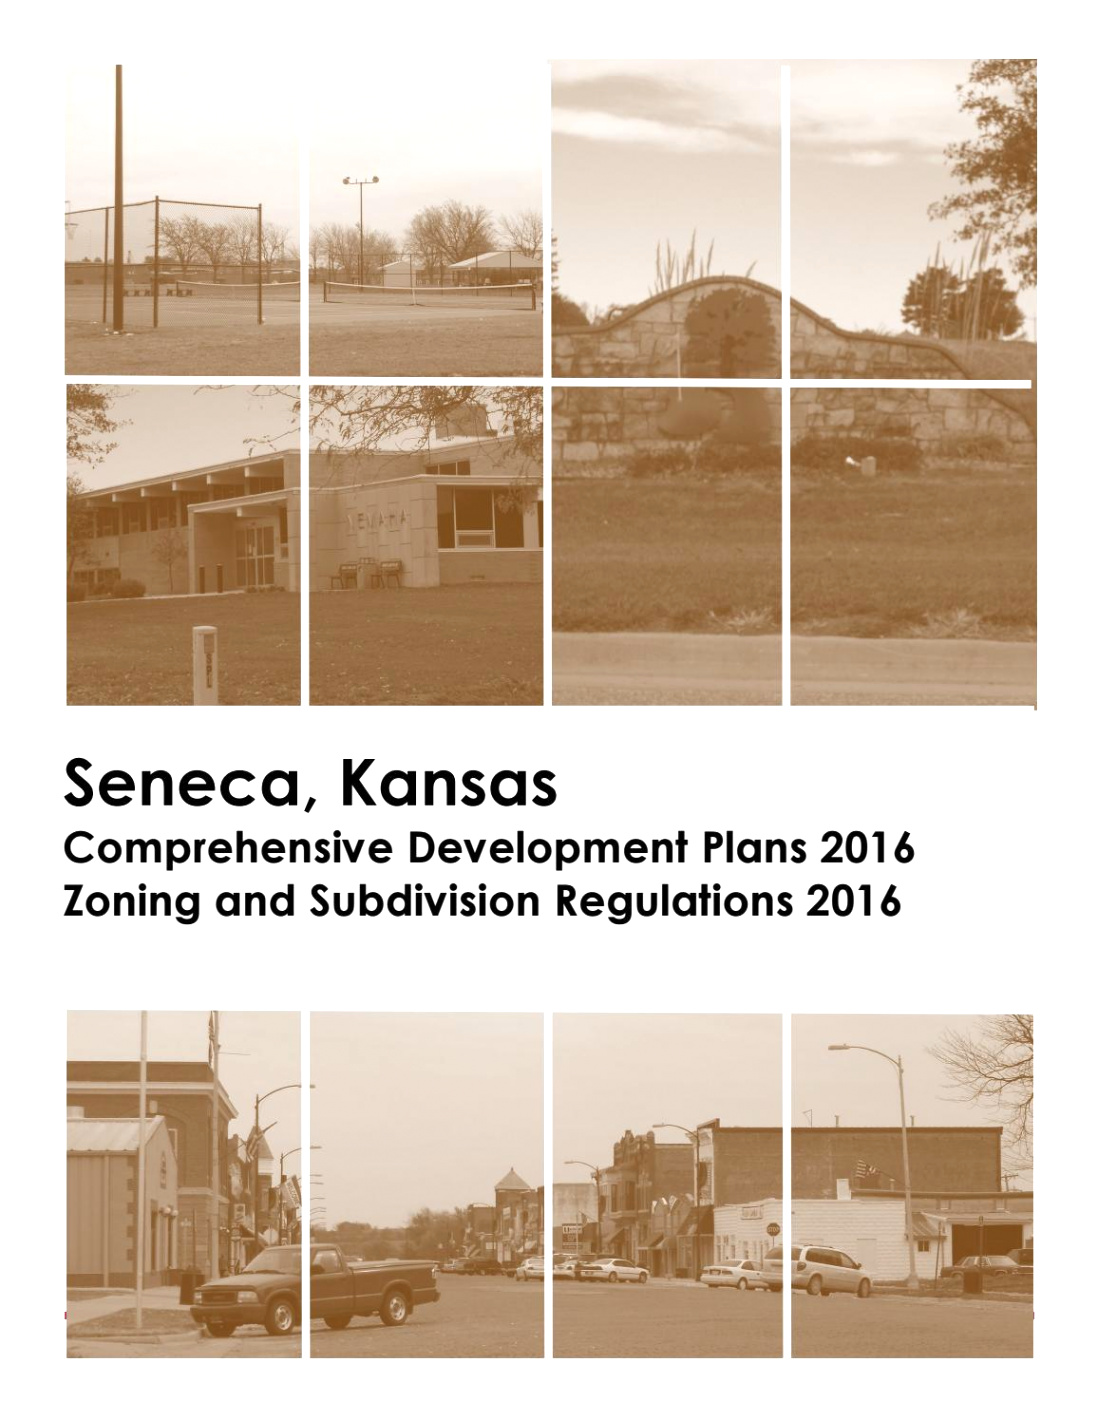 Car Rental software In Nemaha Ks Dans Seneca, Kansas Comprehenisve Plan by Kmarvin - issuu